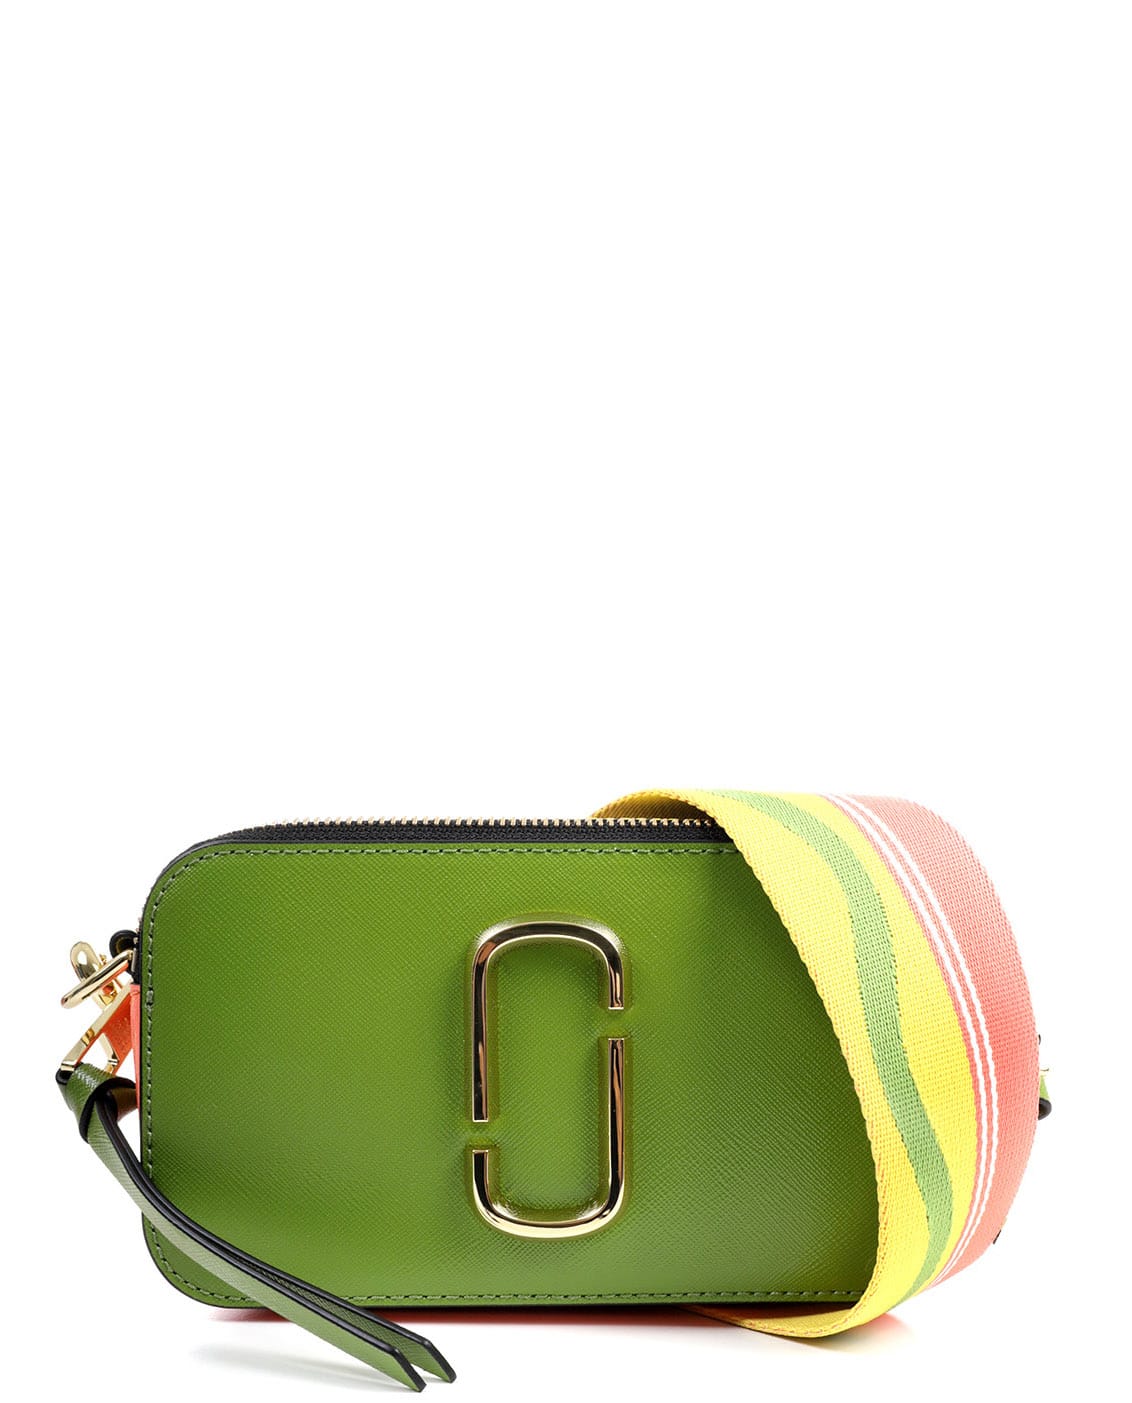 Marc Jacobs Green Snapshot Bag